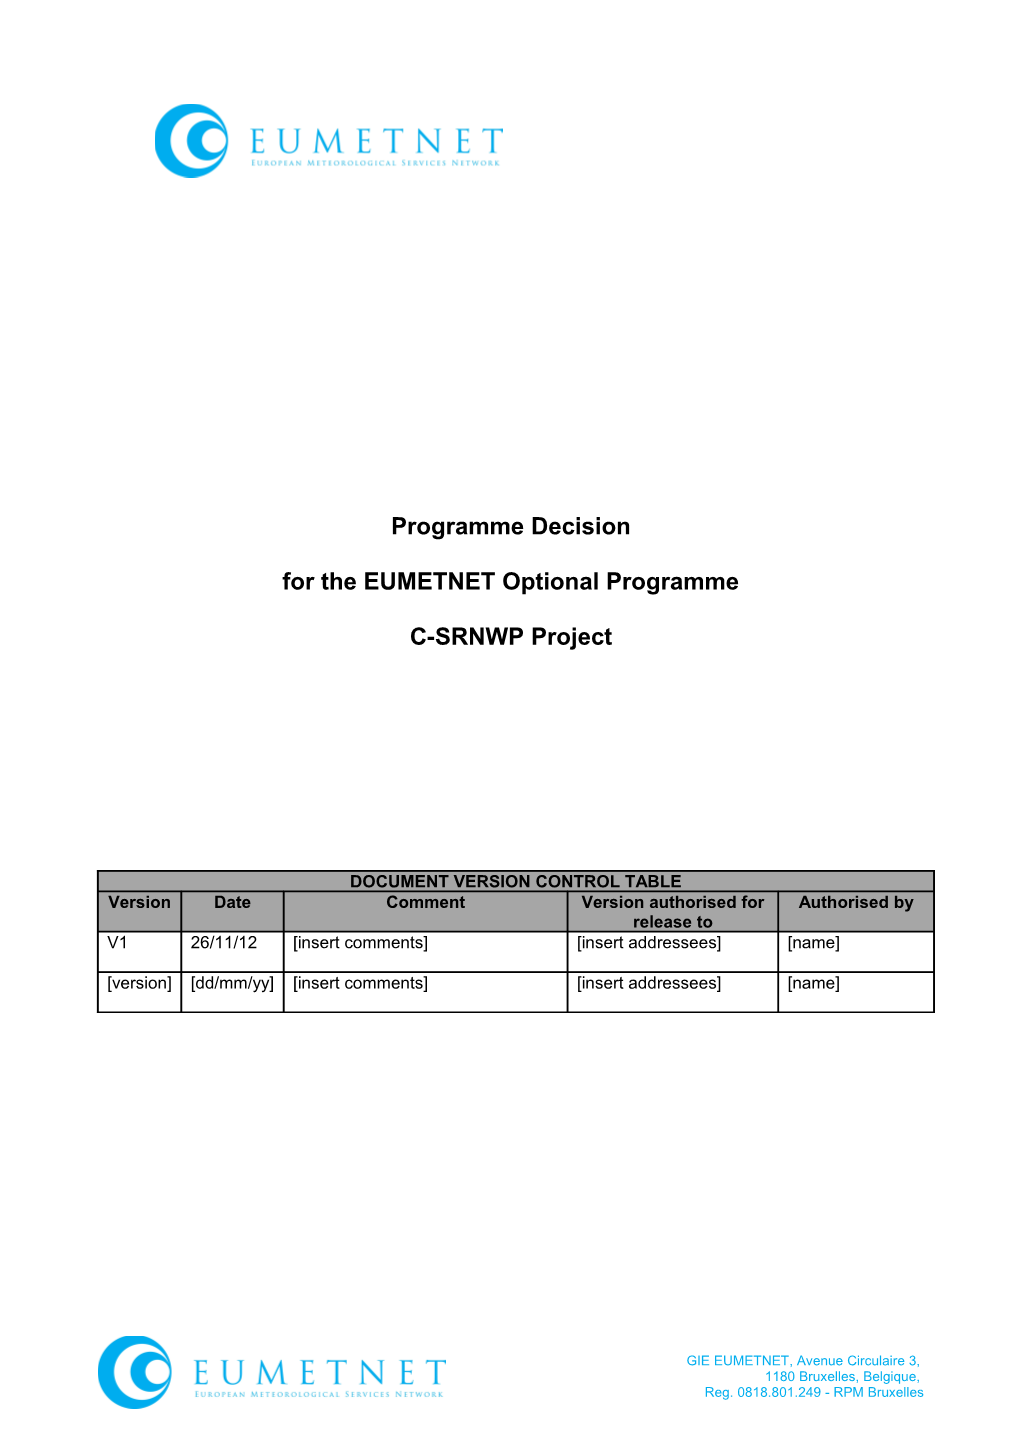 For the EUMETNET Optional Programme